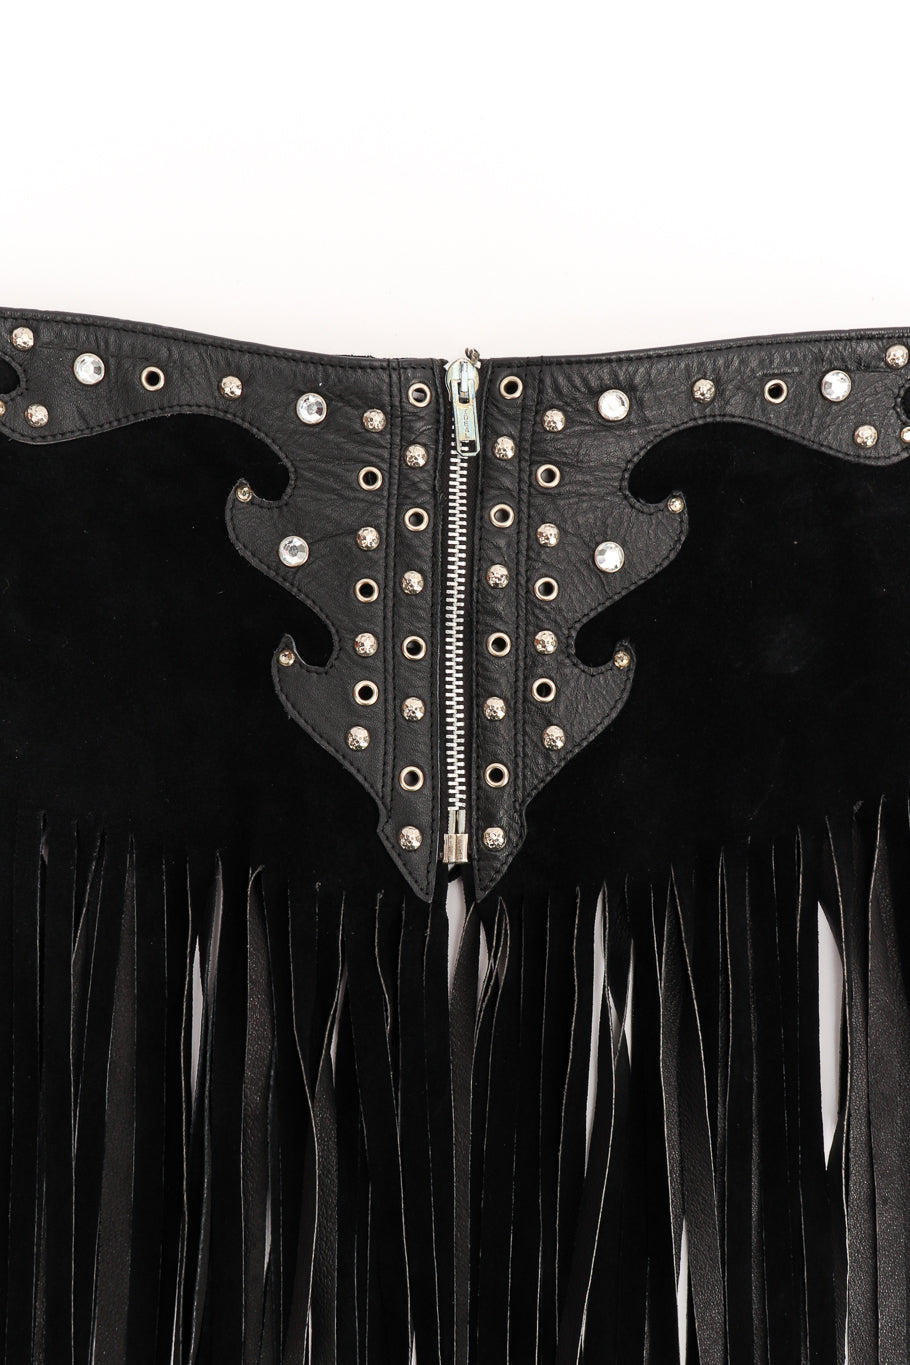 leather fringe belt skirt by Free Art Studio zipper close @recessla